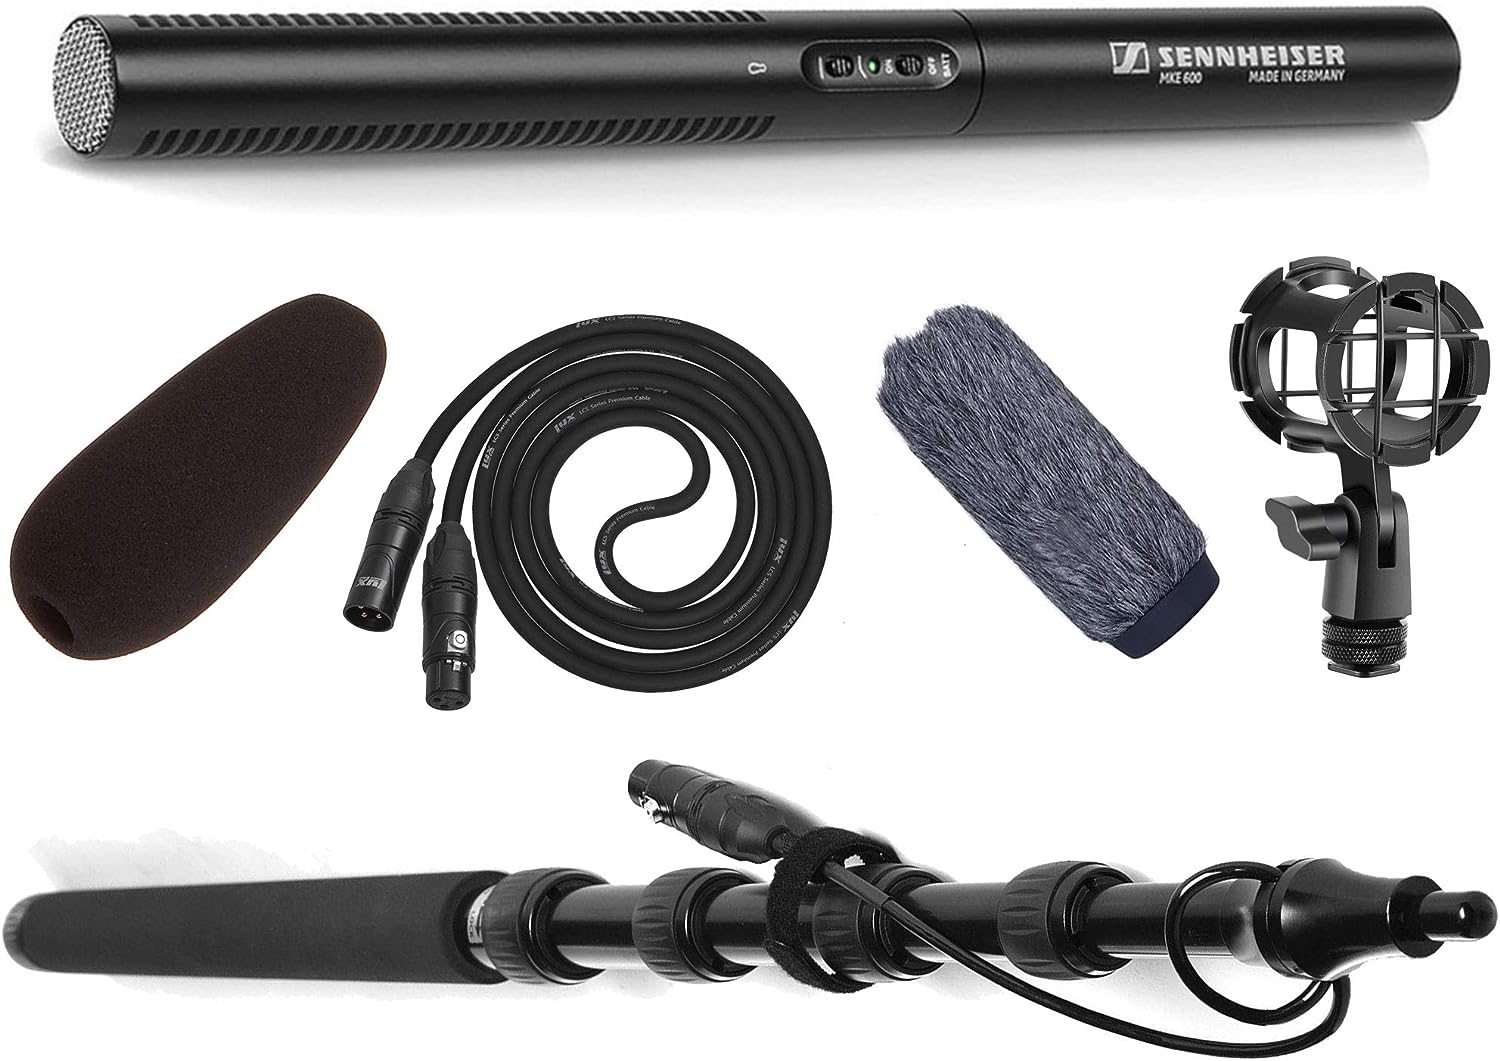 Sennheiser MKE 600 - Kit Completo de micrófono para Video, Cine y difusión con boompole LyxPro, Montaje para Parabrisas